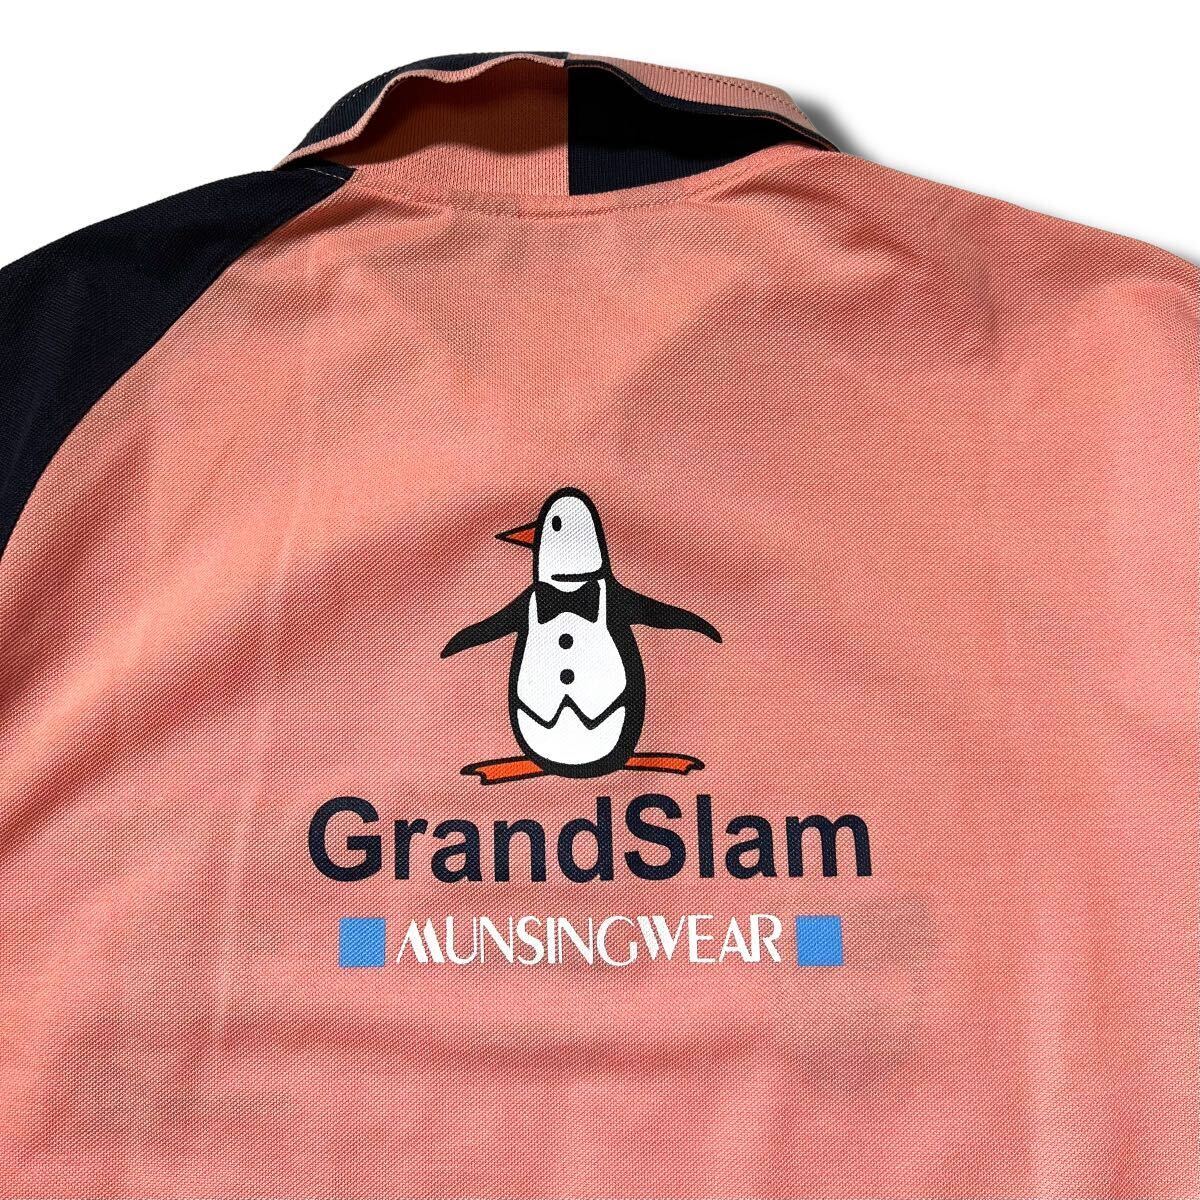  beautiful goods MUNSING WEAR Grand Slam dry Golf polo-shirt with short sleeves Lbai color badge embroidery print Munsingwear wear Grand s Ram 